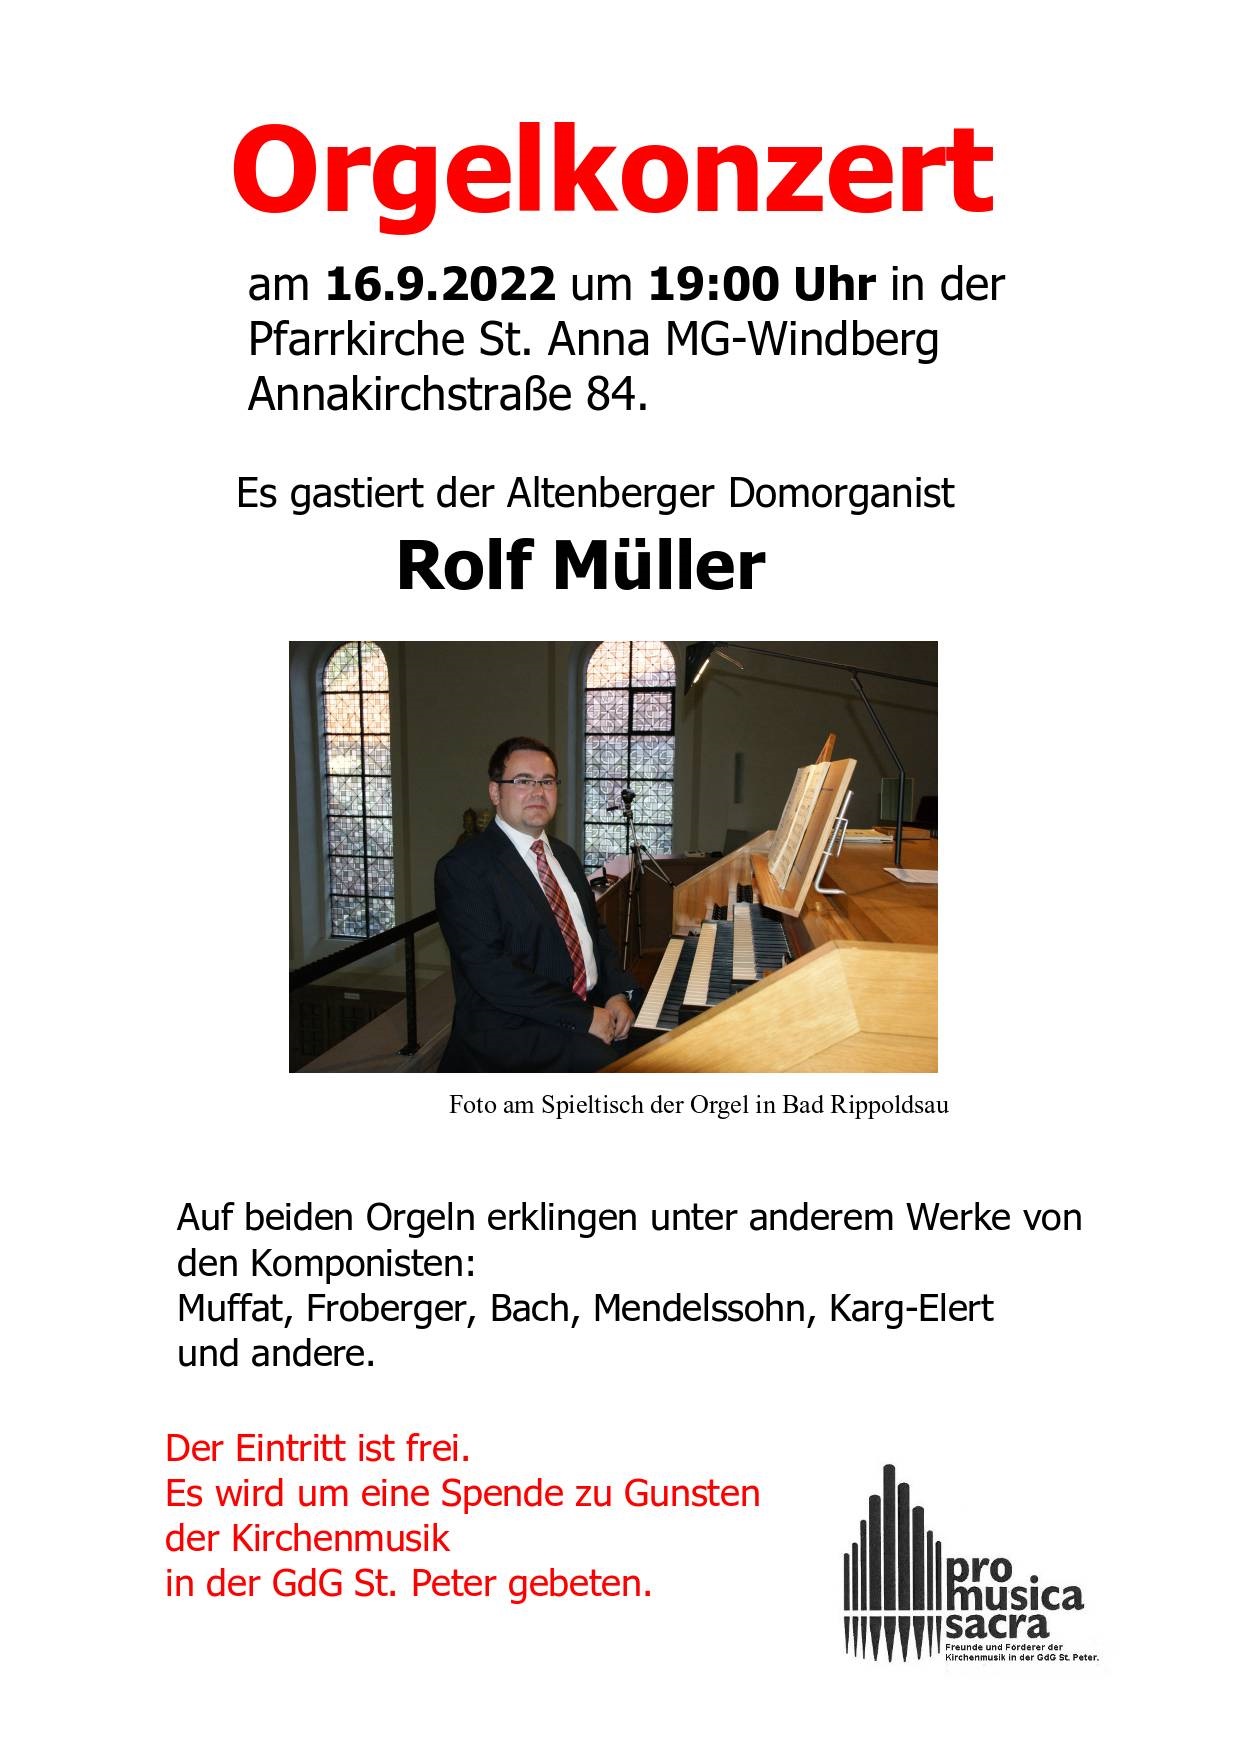 Orgelkonzert (c) GdG St. Peter /pro Musica Sacra